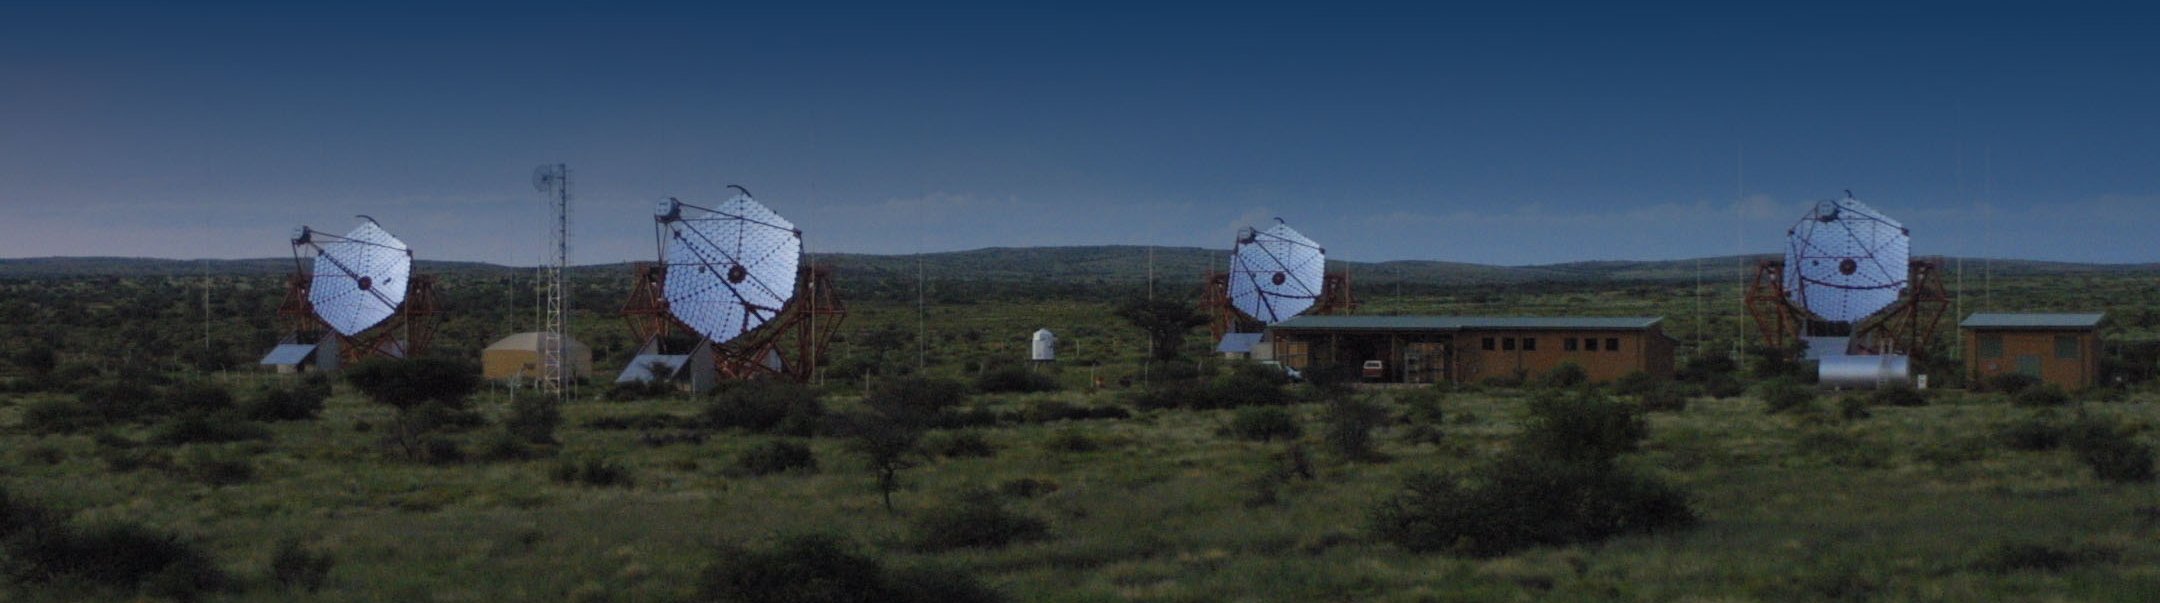 H.E.S.S. telescopes